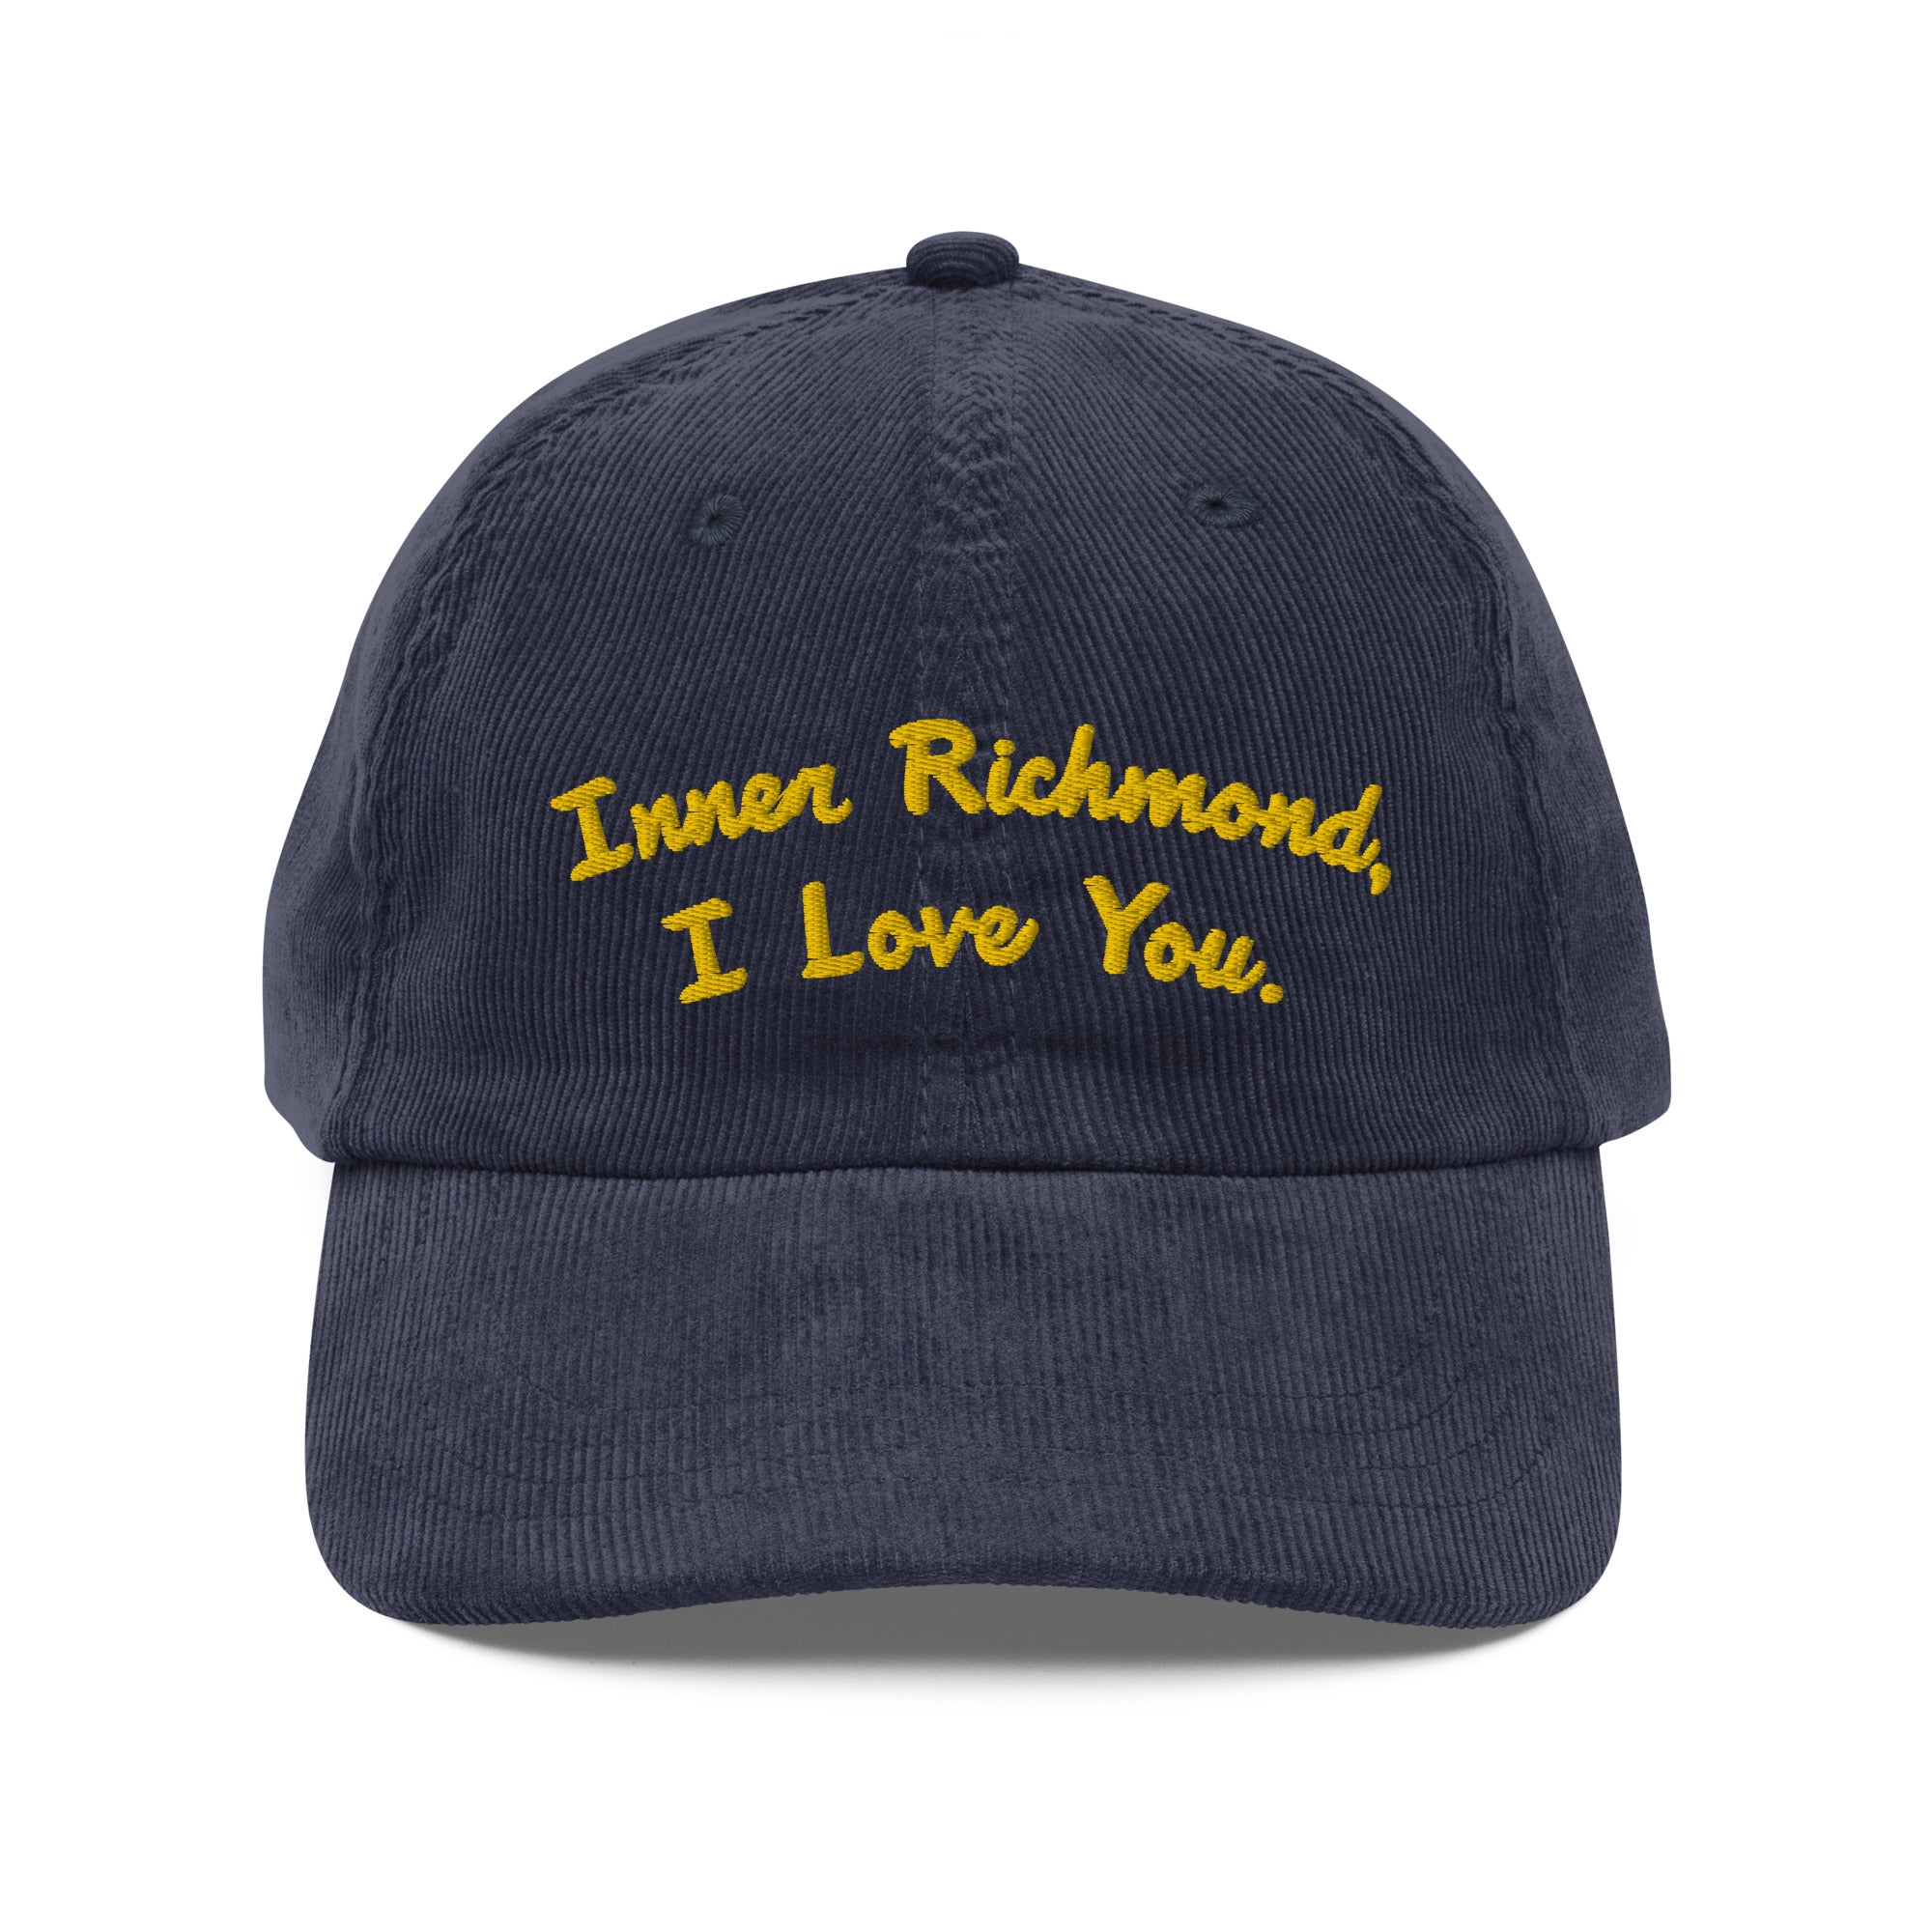 I Love You Corduroy Hat - Inner Richmond | San Francisco, CA